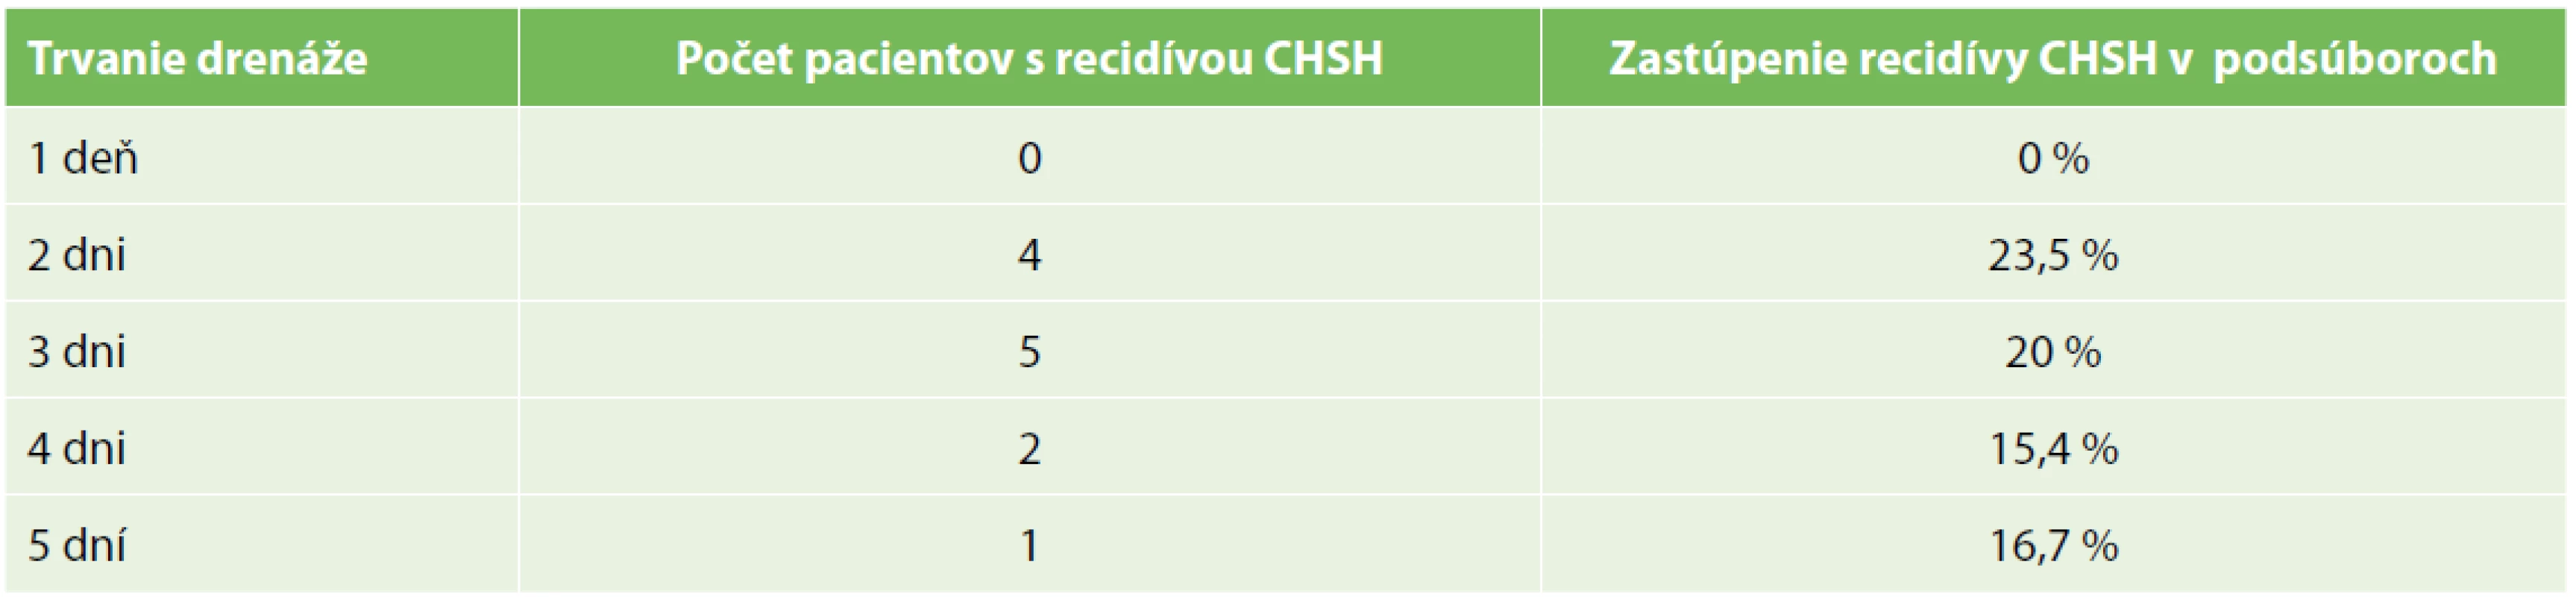 Incidencia recidívy CHSH v závislosti od trvania subdurálnej drenáže<br>
Tab. 1. The incidence of CHSH recurrence depending on the duration of subdural drainage